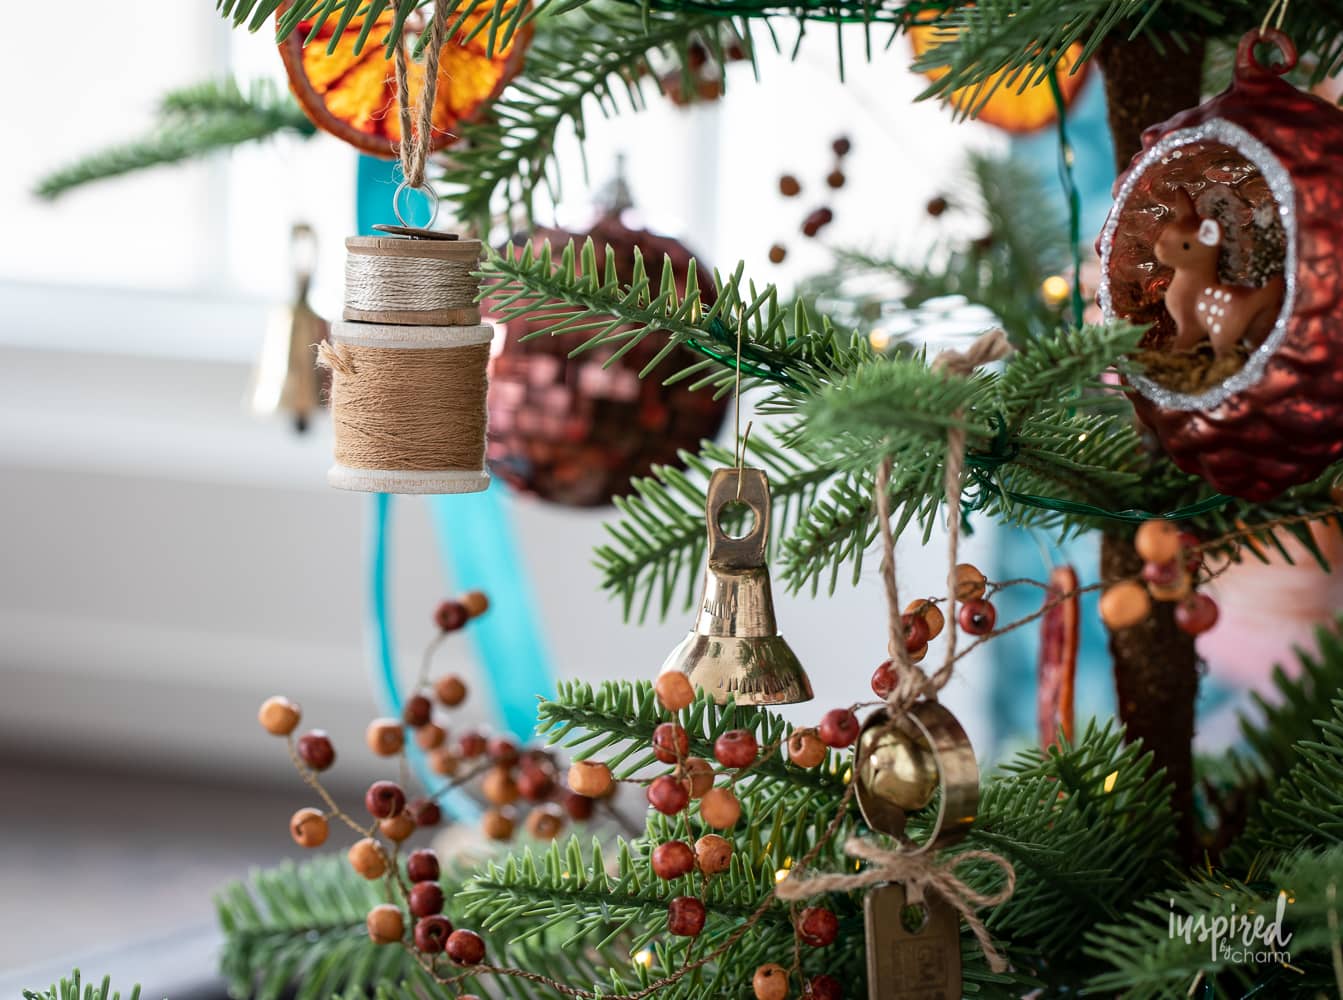 Little Treasures Christmas Tree #christmas #holiday #decor #christmastree #decorations #ideas #driedoranges #vintage